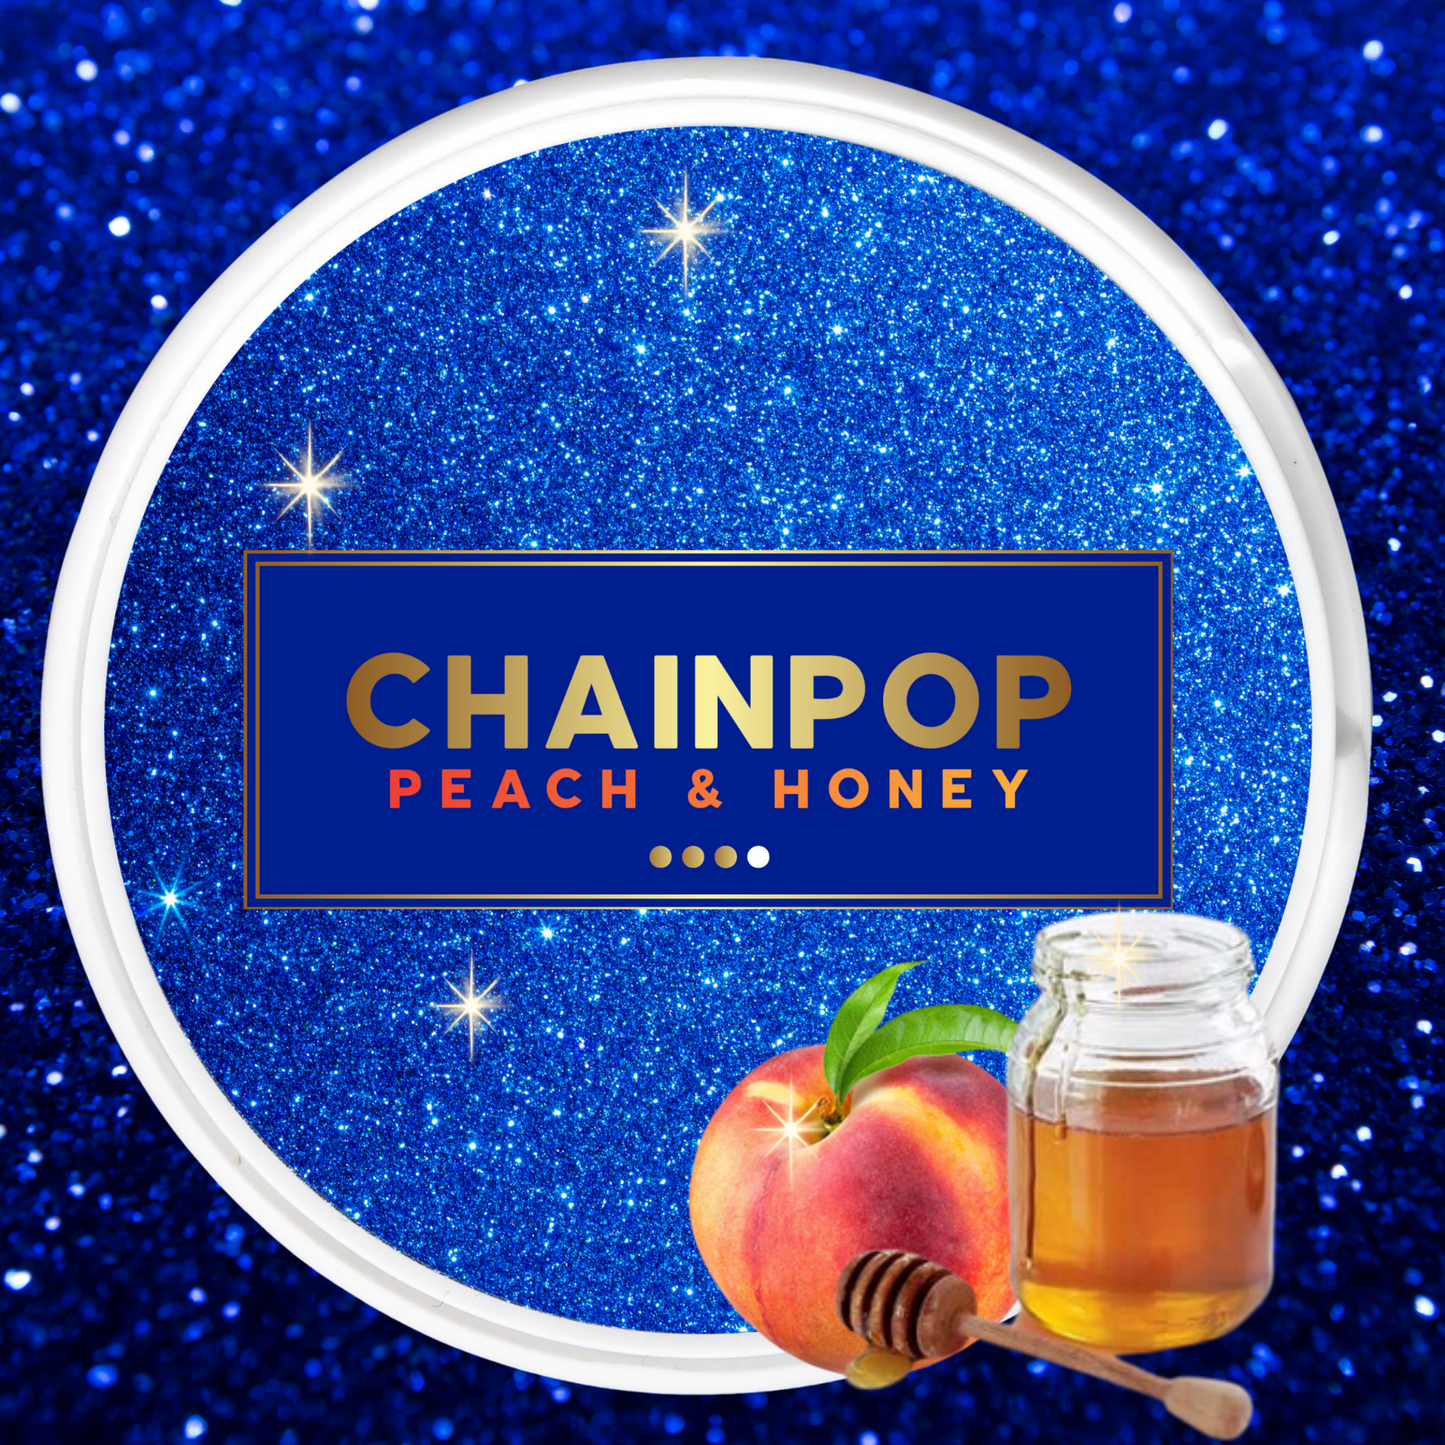 Chainpop Peach & Honey